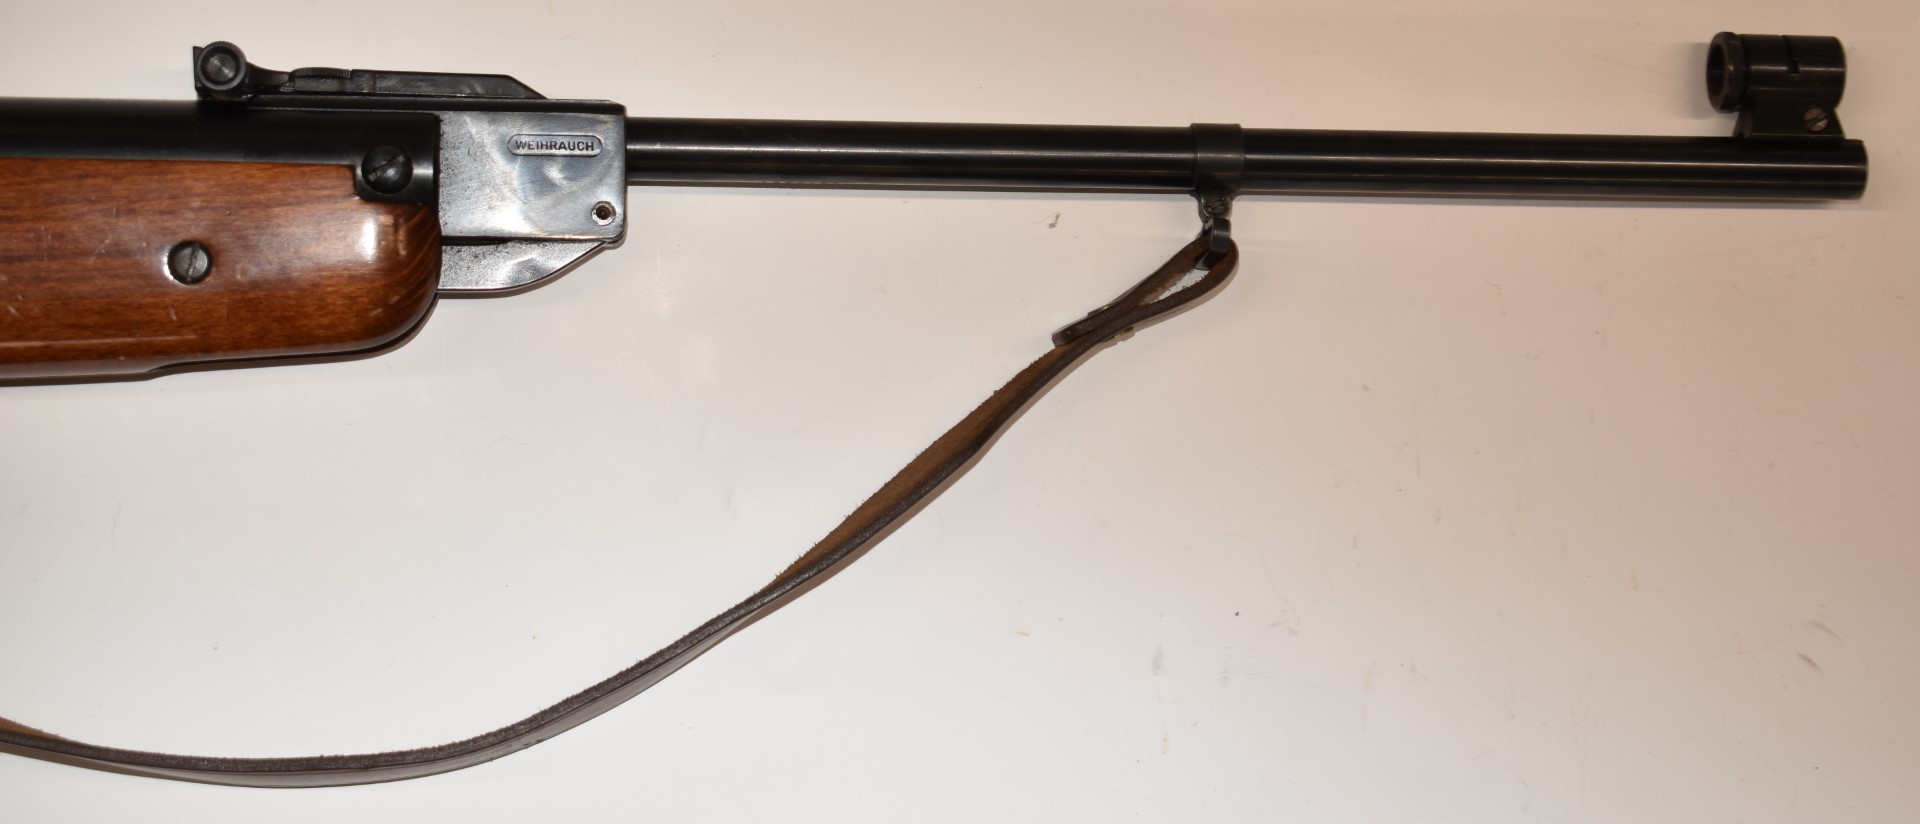 Weihrauch HW80K .22 air rifle with chequered semi-pistol grip, raised cheek piece, adjustable - Image 5 of 11